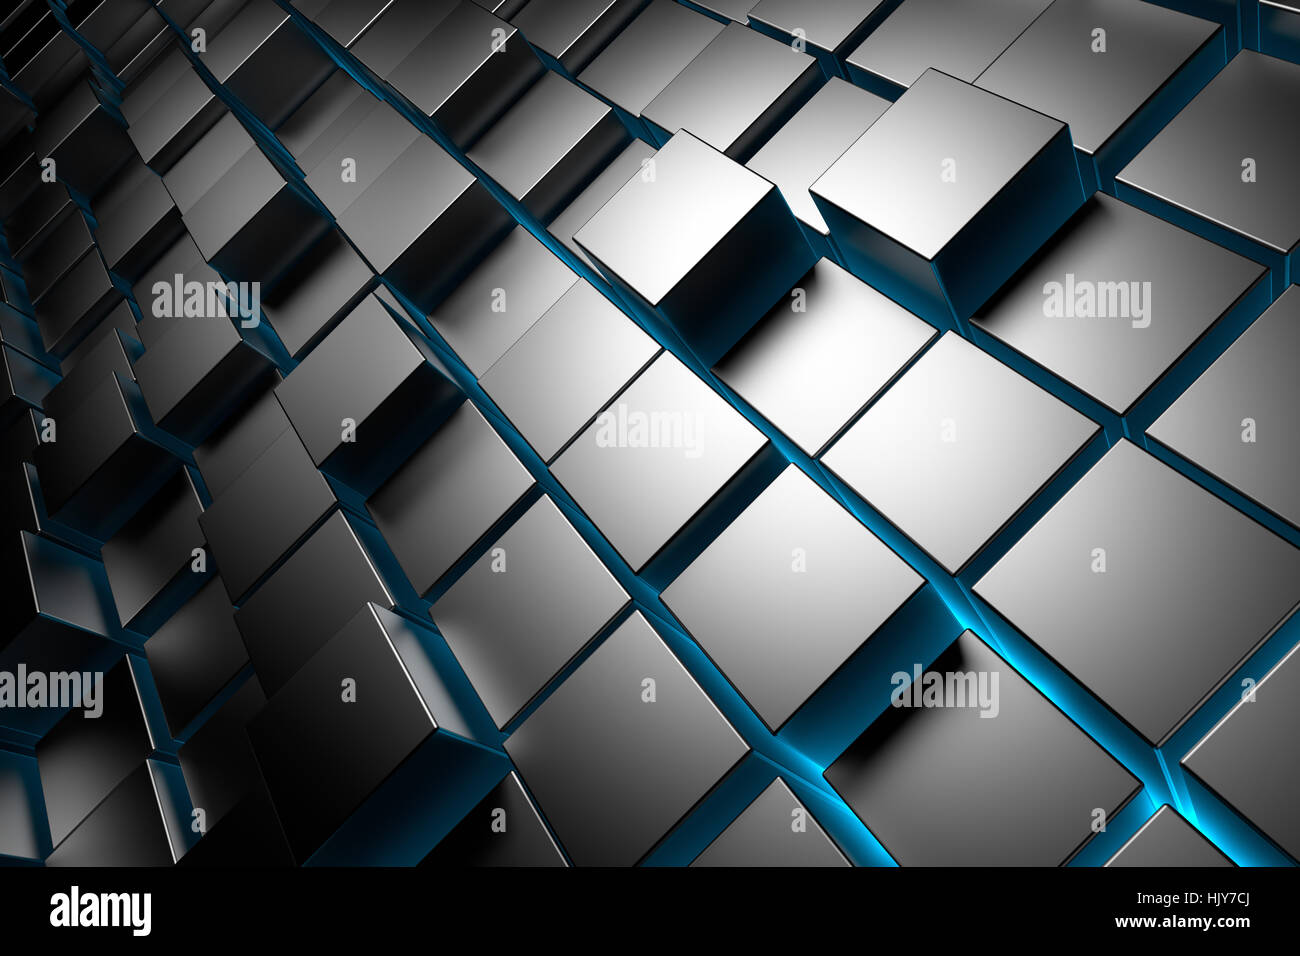 illustration, metal, square, brick, cube, backdrop, background, blue, art, Stock Photo